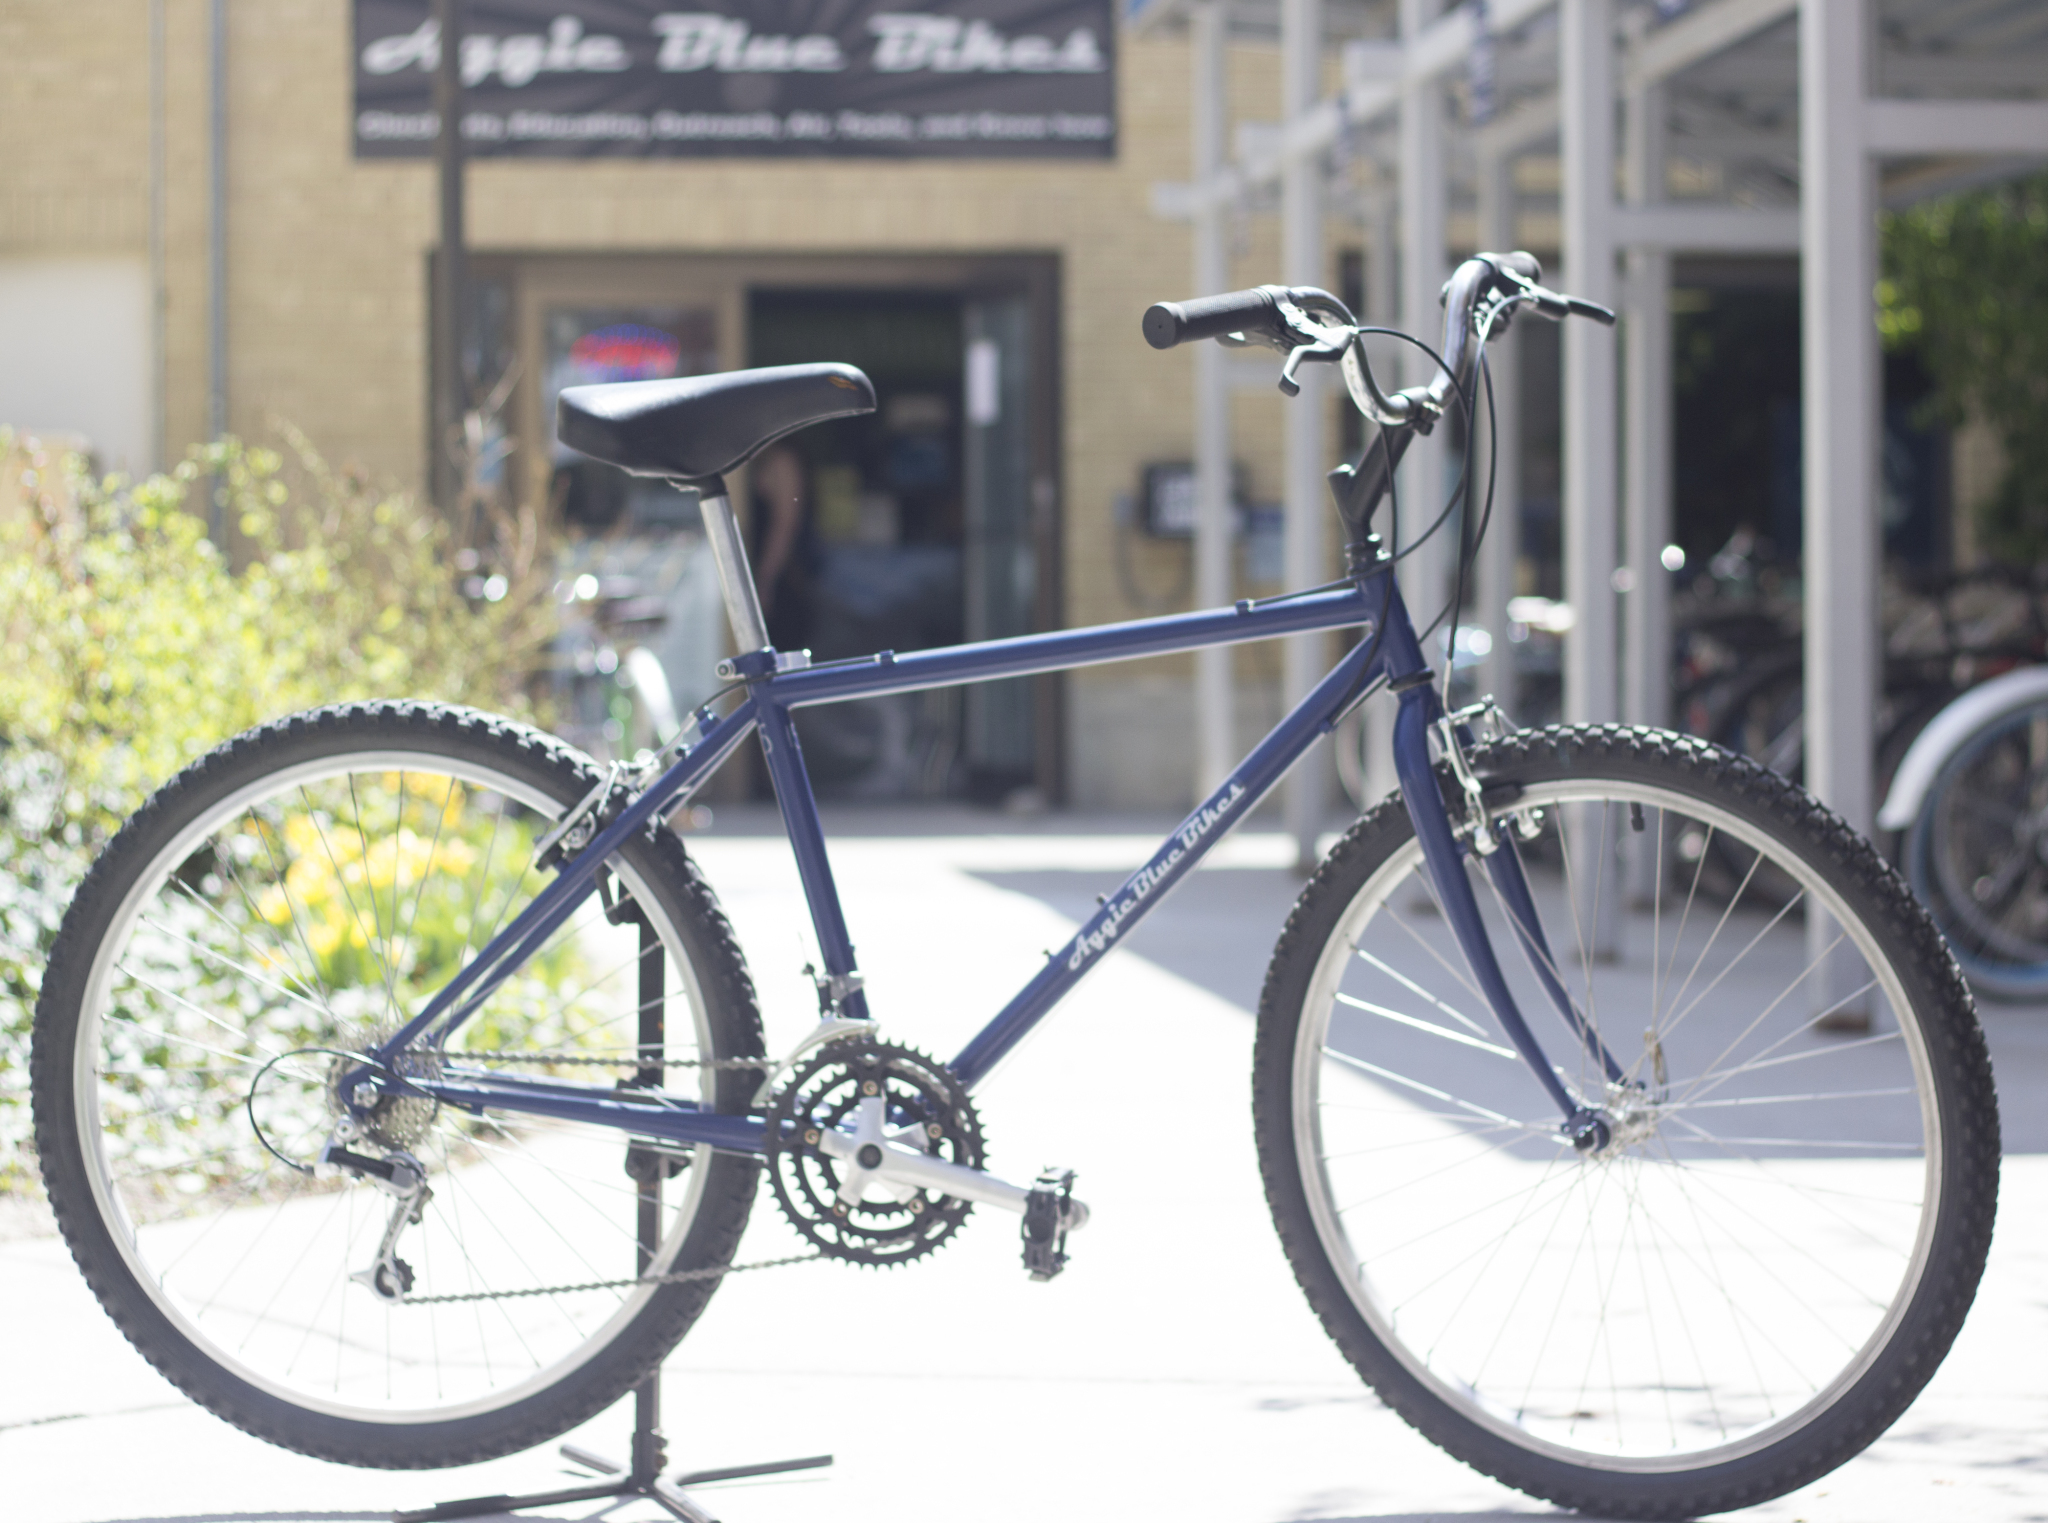 Aggie Blue Bikes | USU